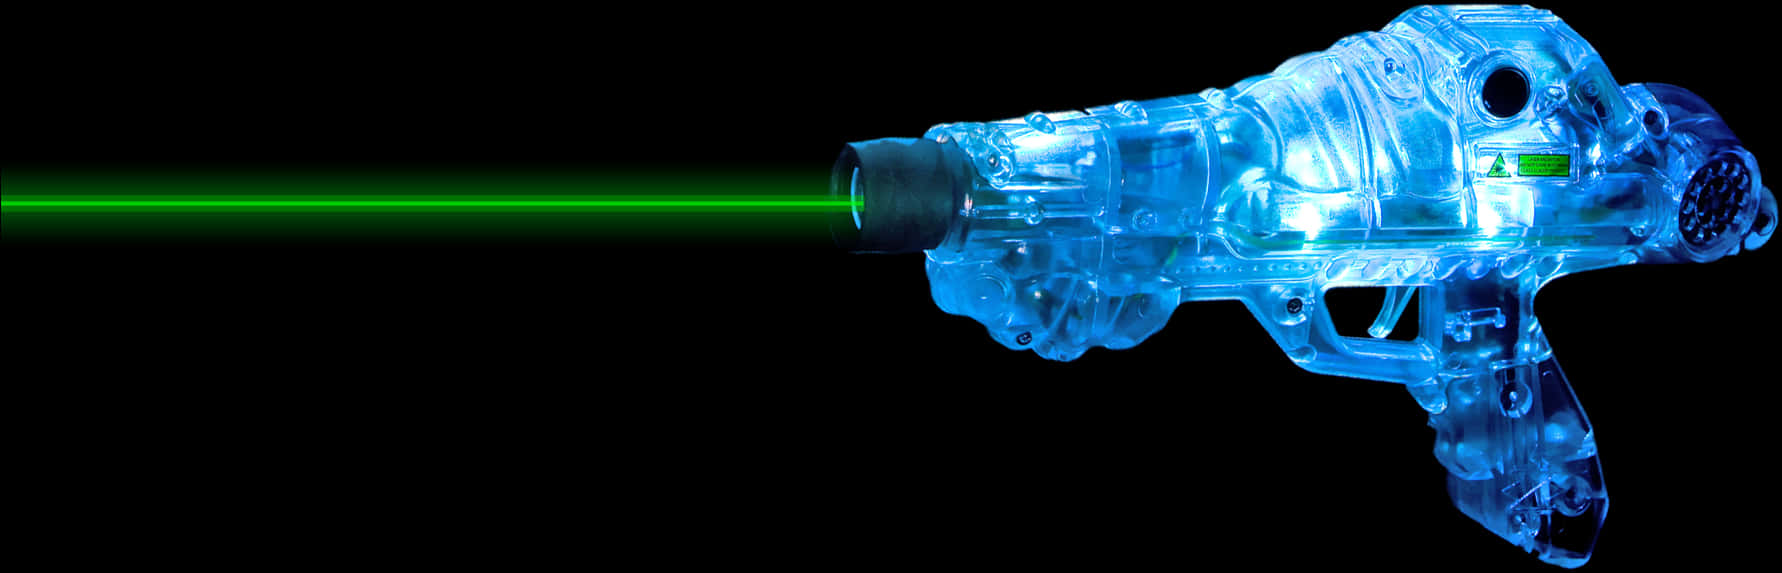 A Blue Laser Gun With Green Laser Beam